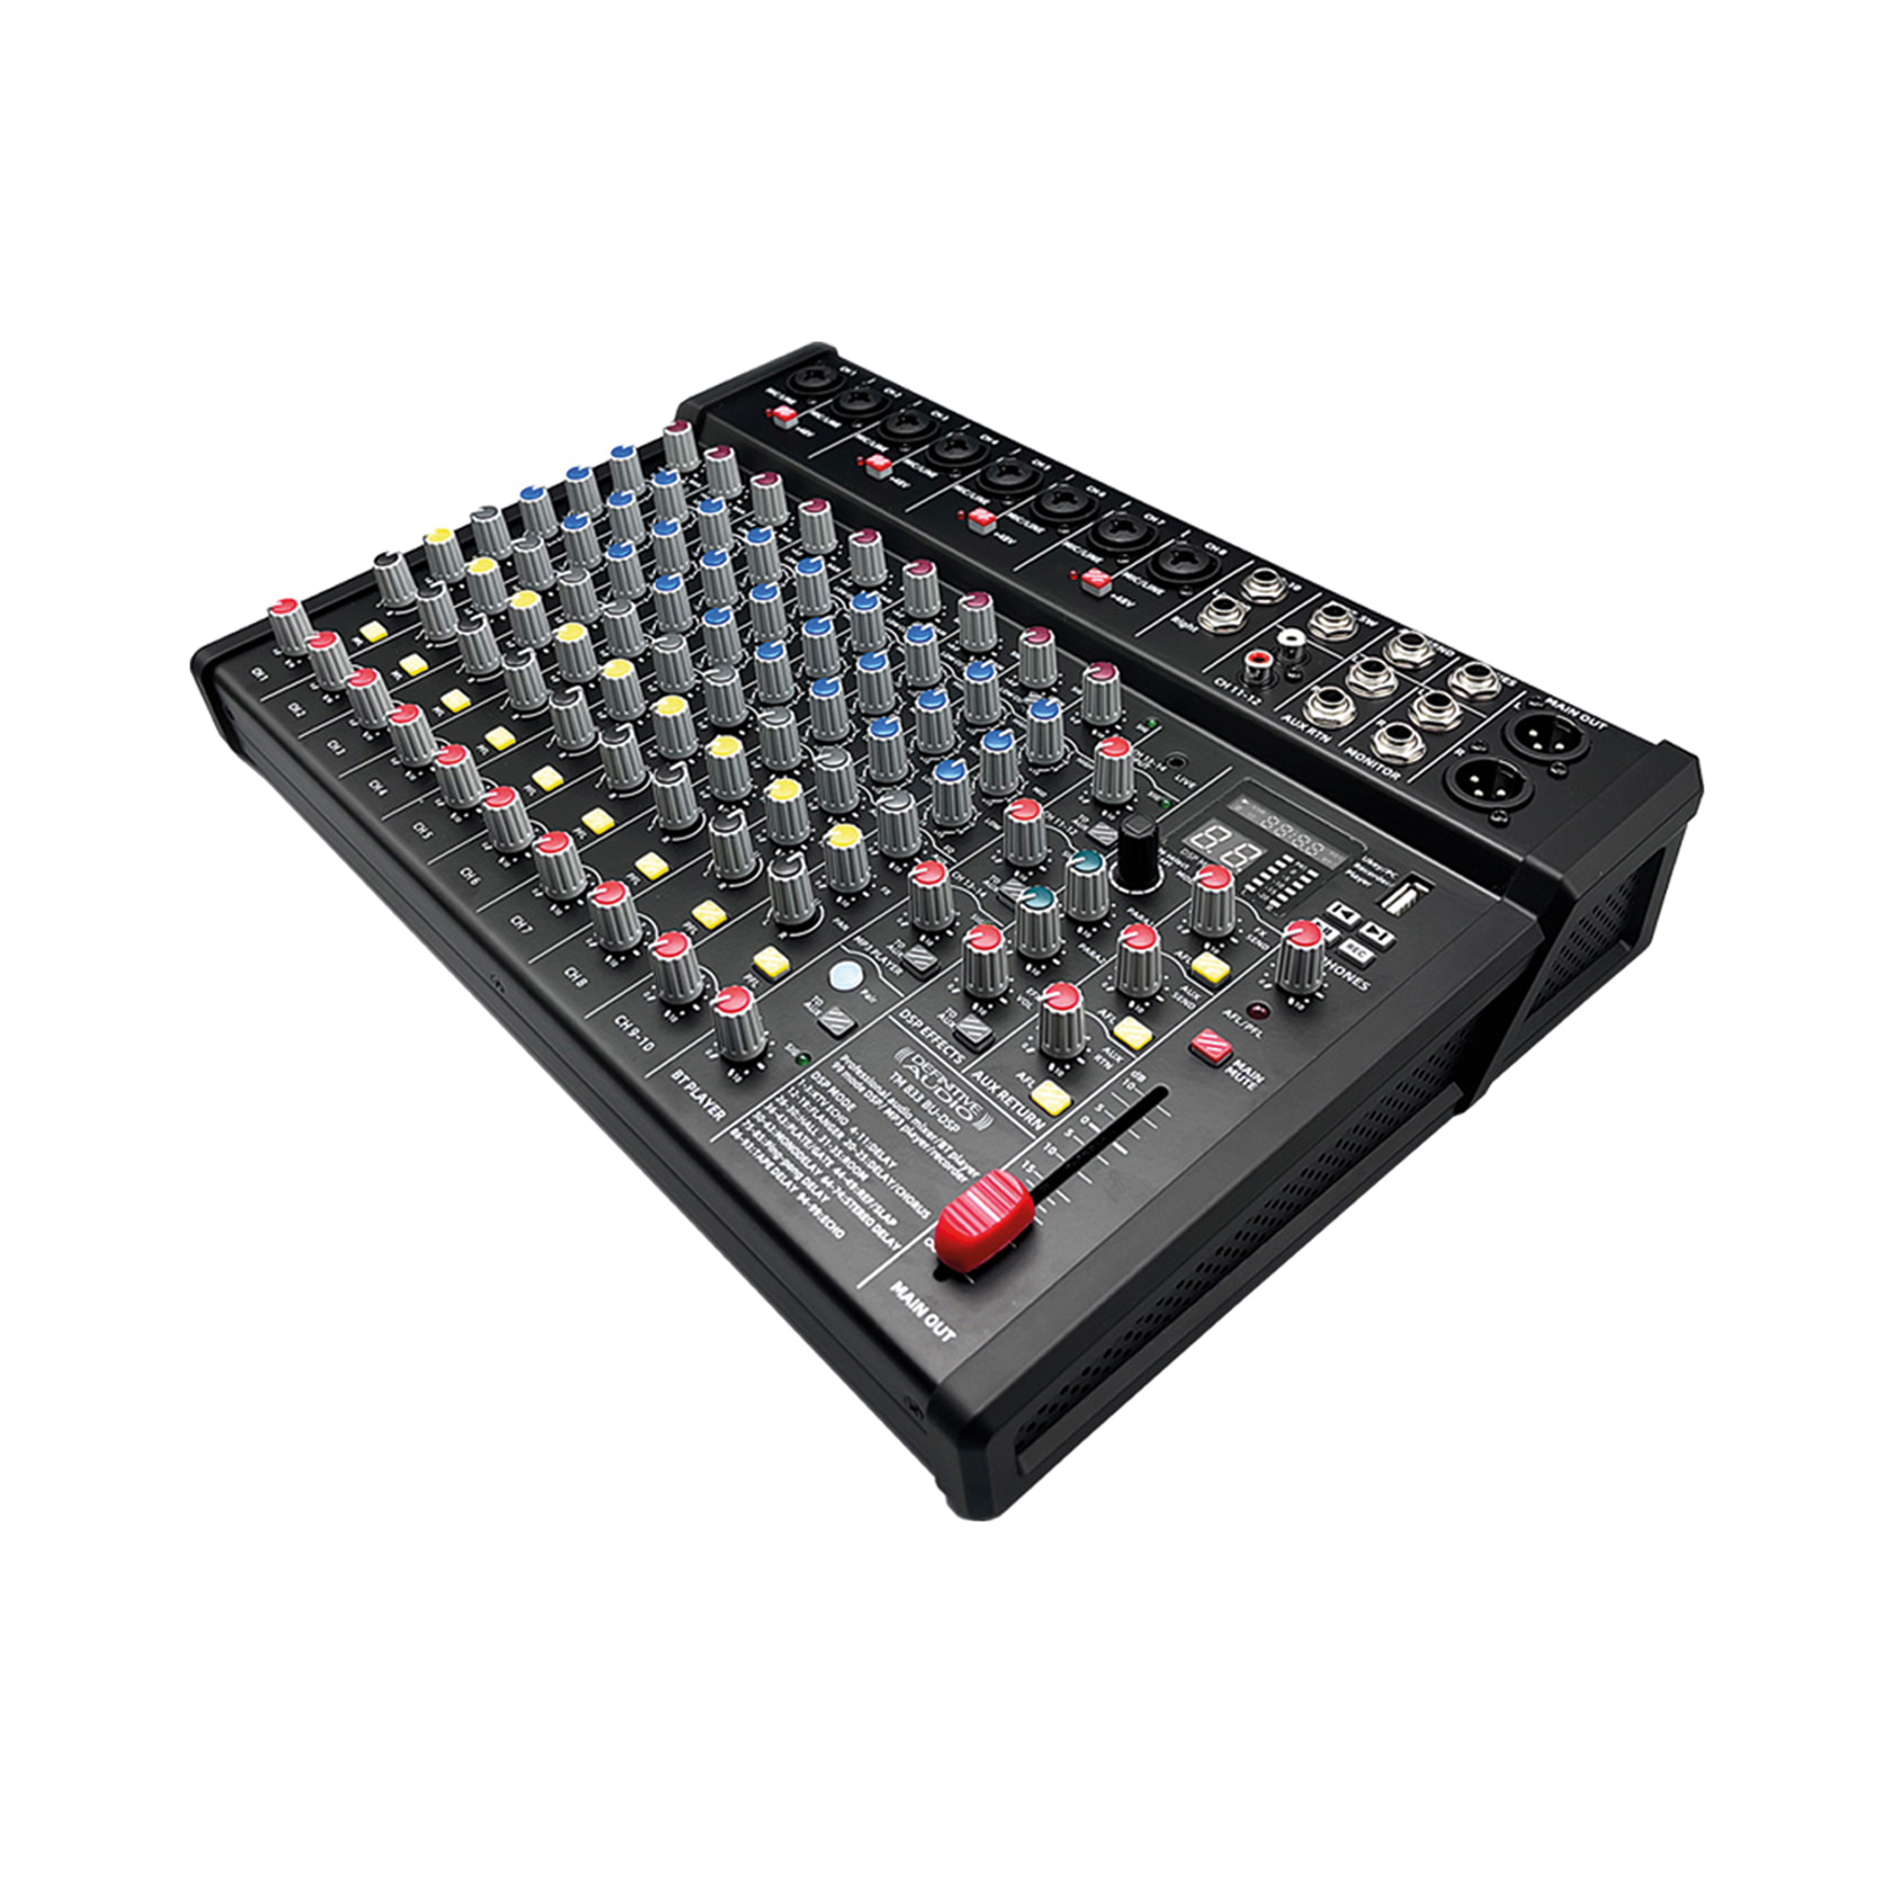 Definitive Audio Tm 833 Bu-dsp - Mesa de mezcla analógica - Variation 1